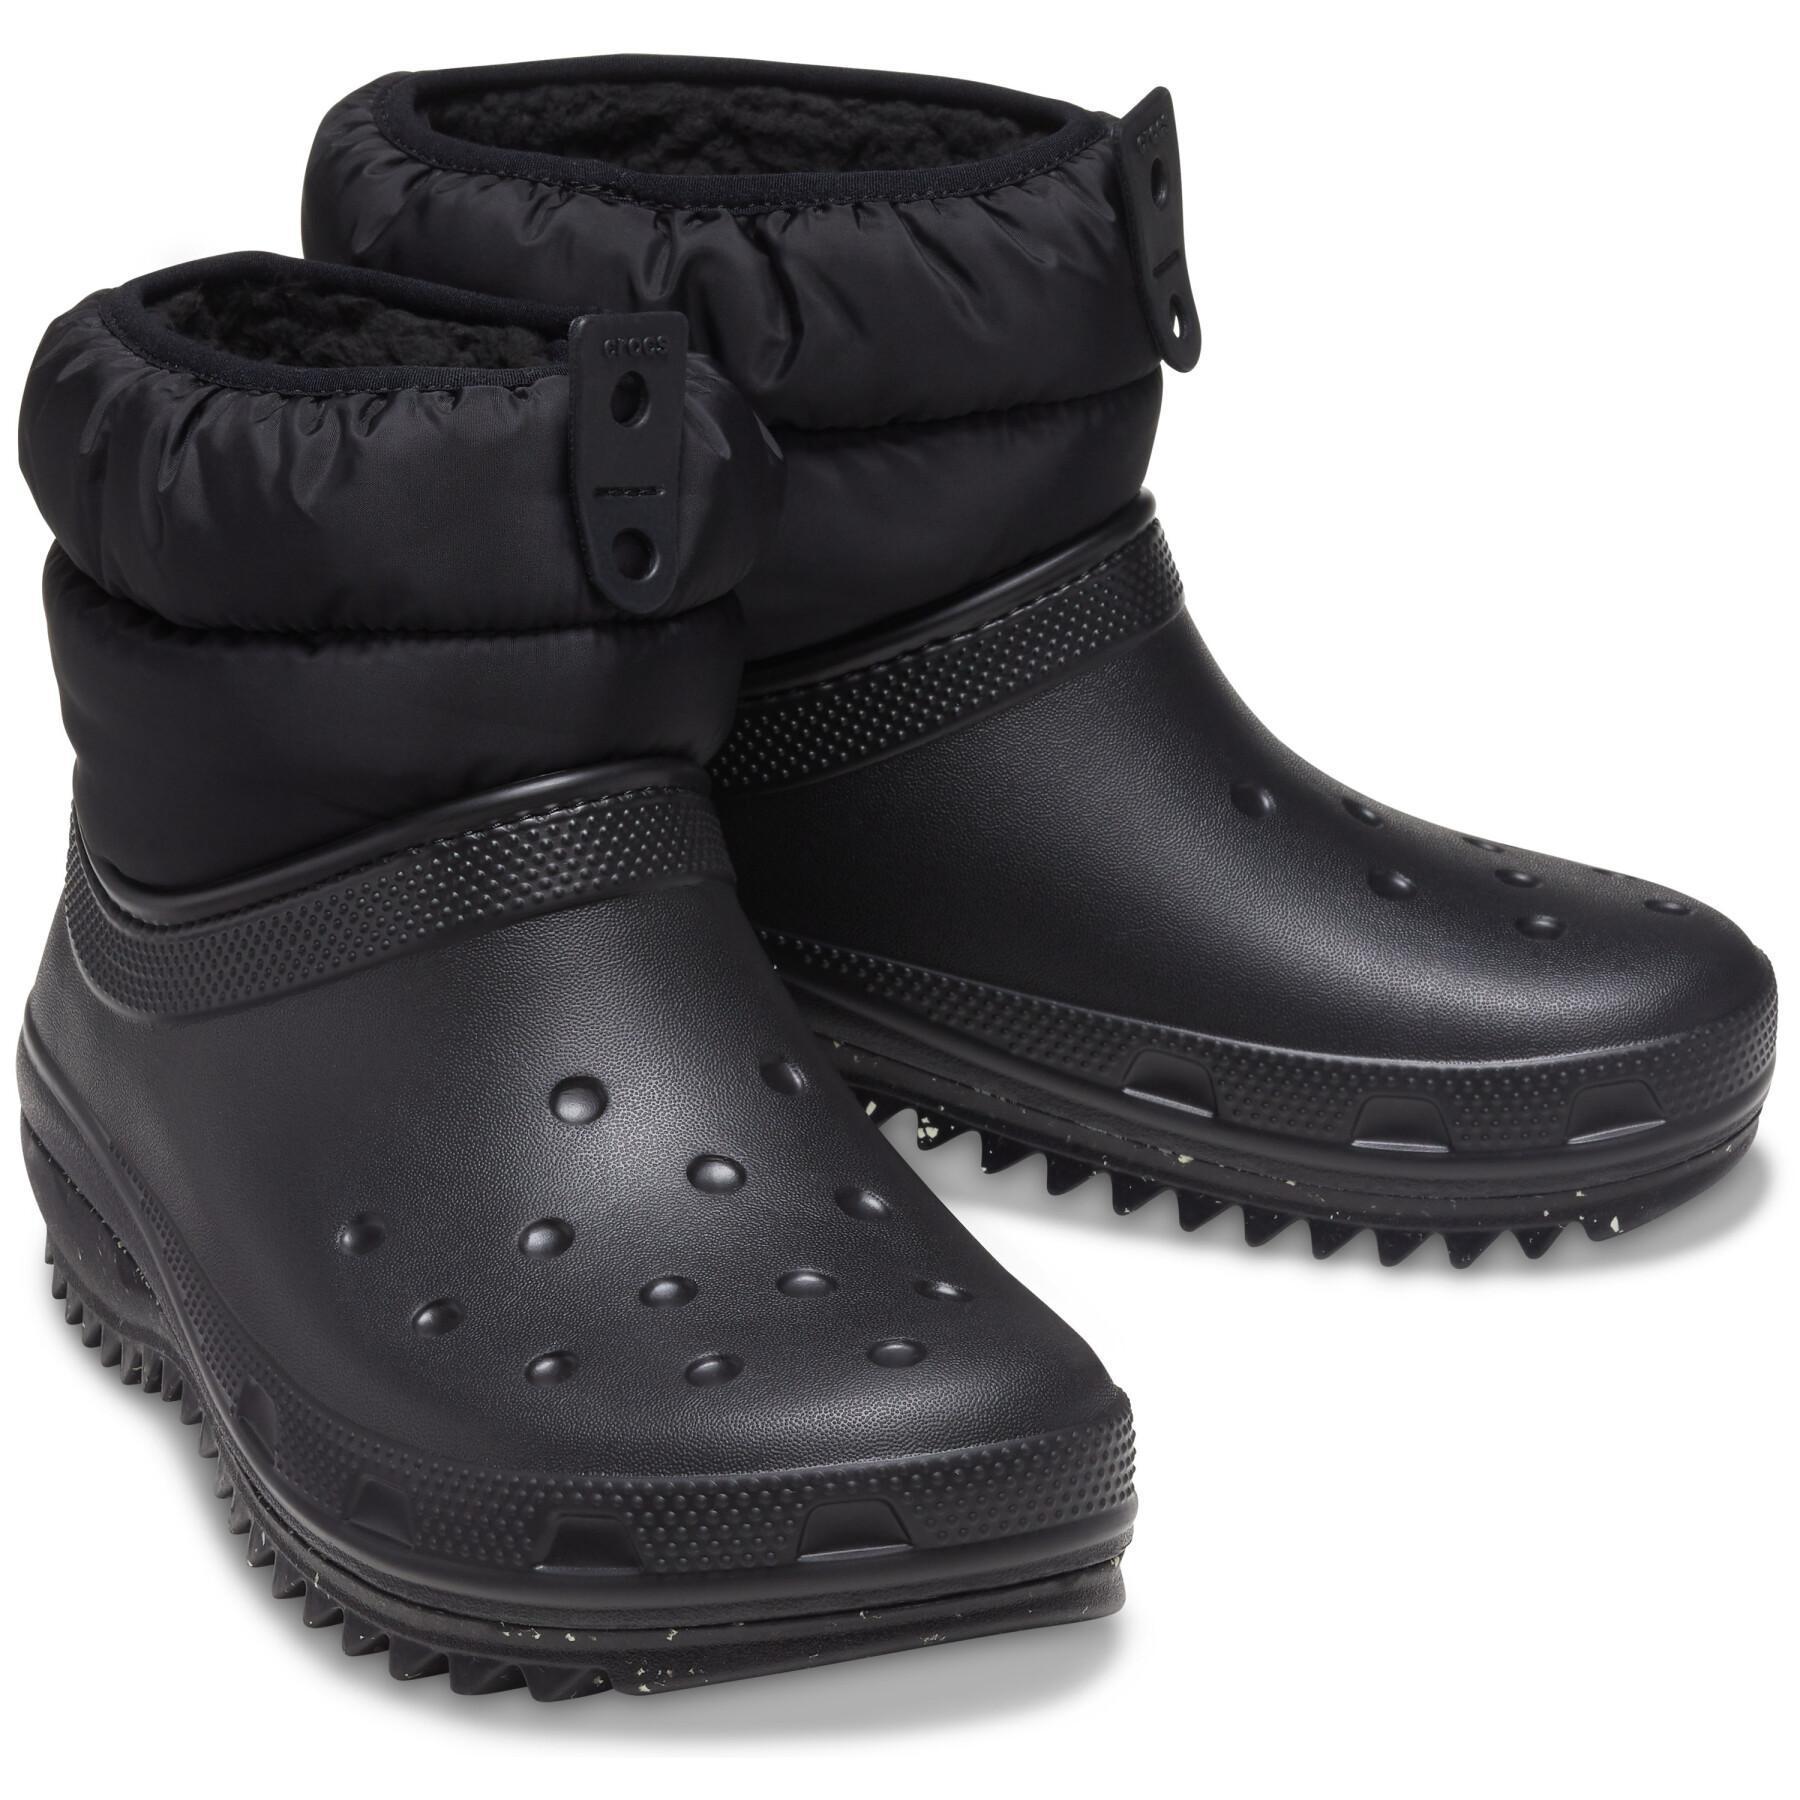 Classic short boots for women Crocs neo puff